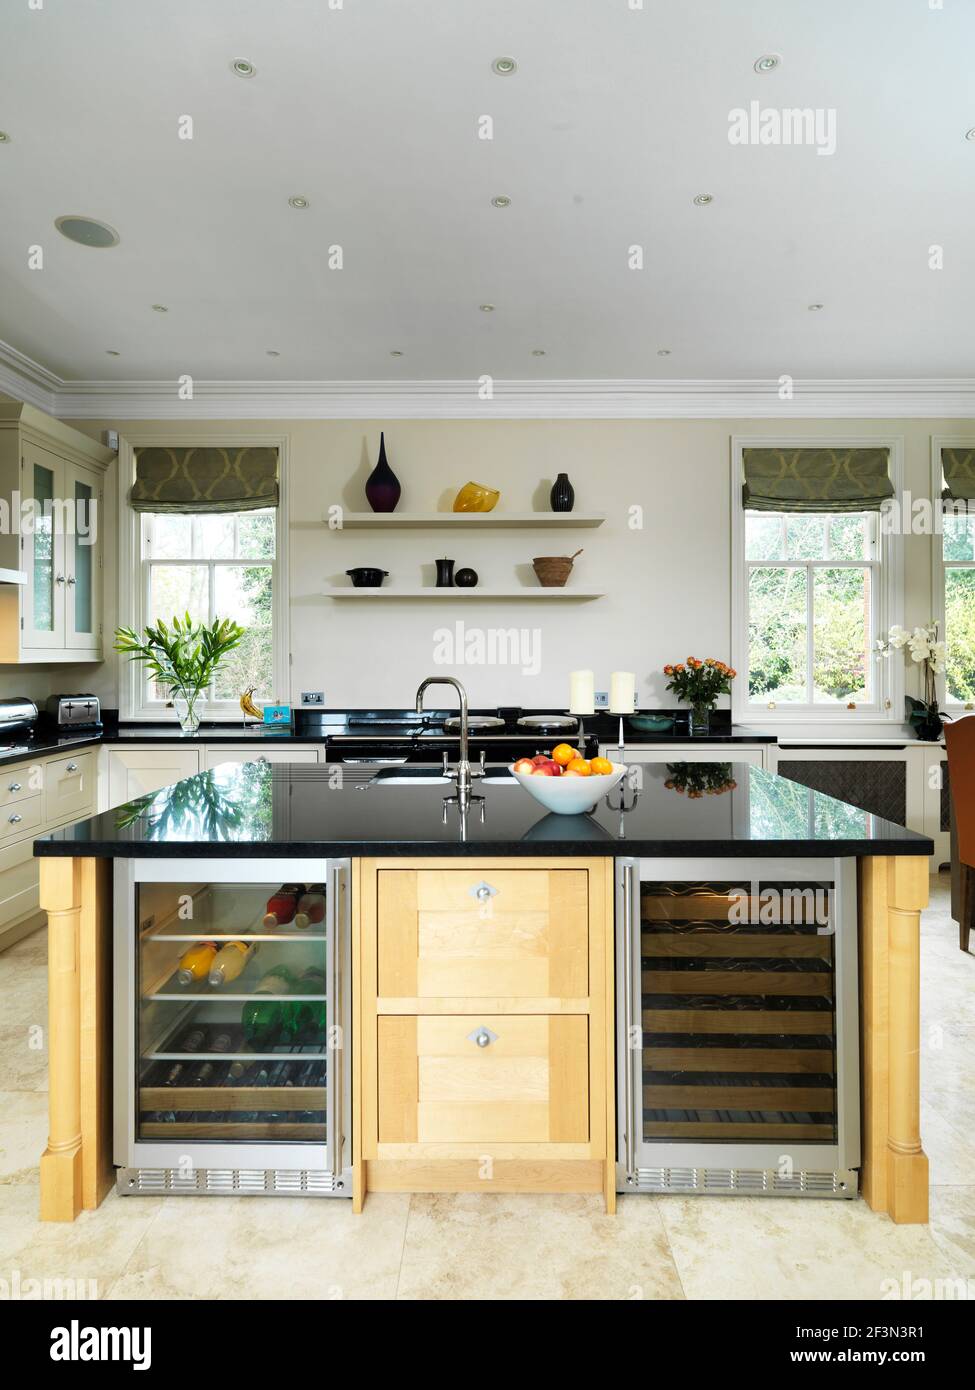 Island unit in modern kitchen, UK home Stock Photo